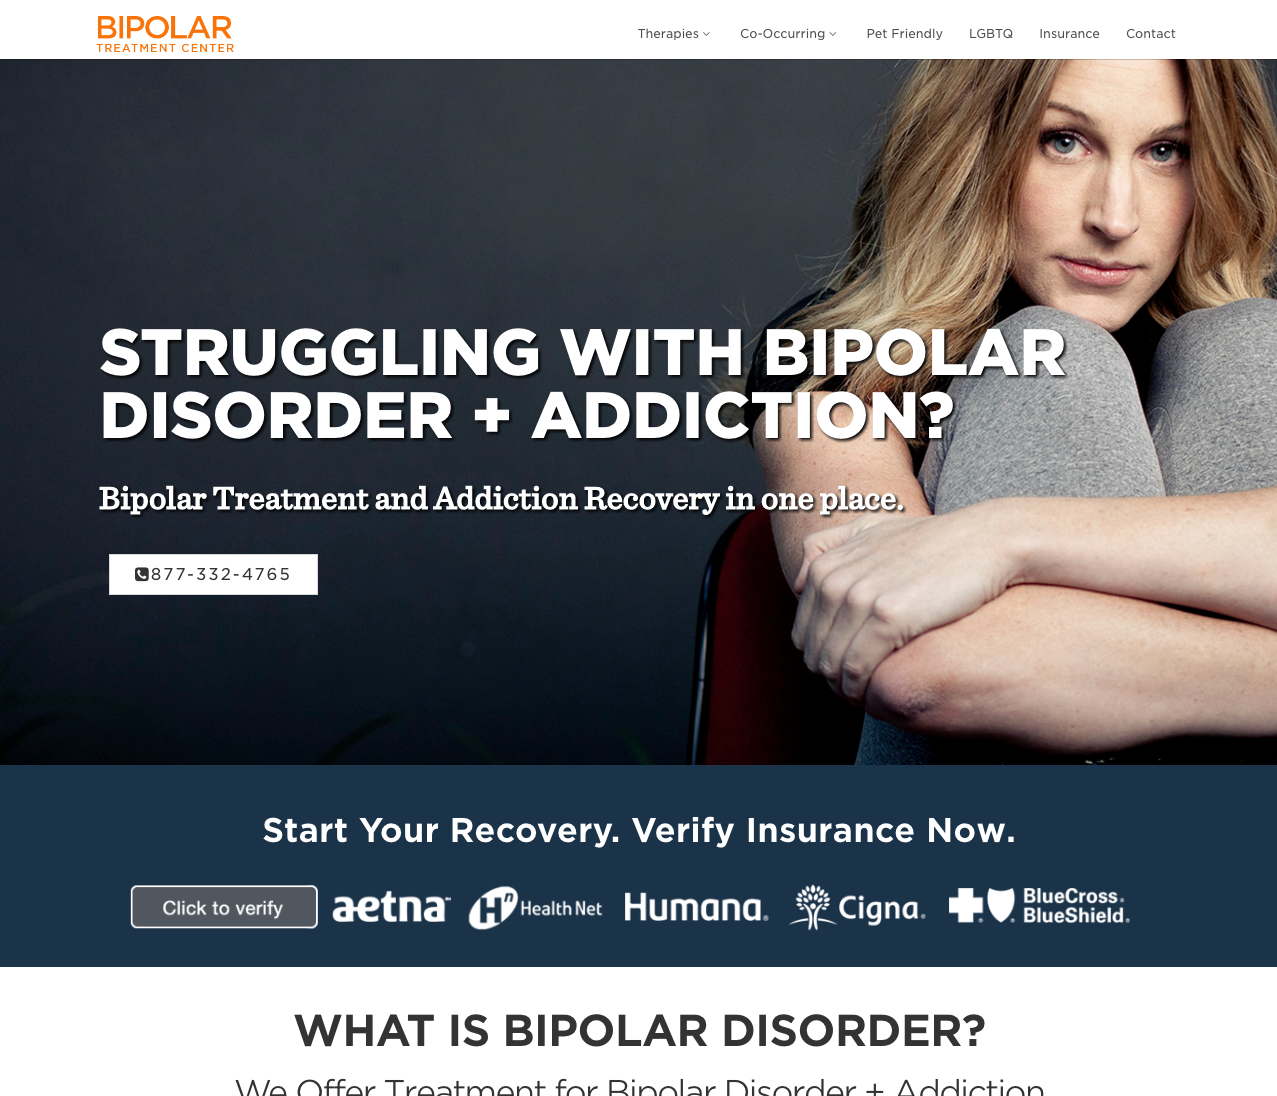 Bipolar Disorder + Addiction